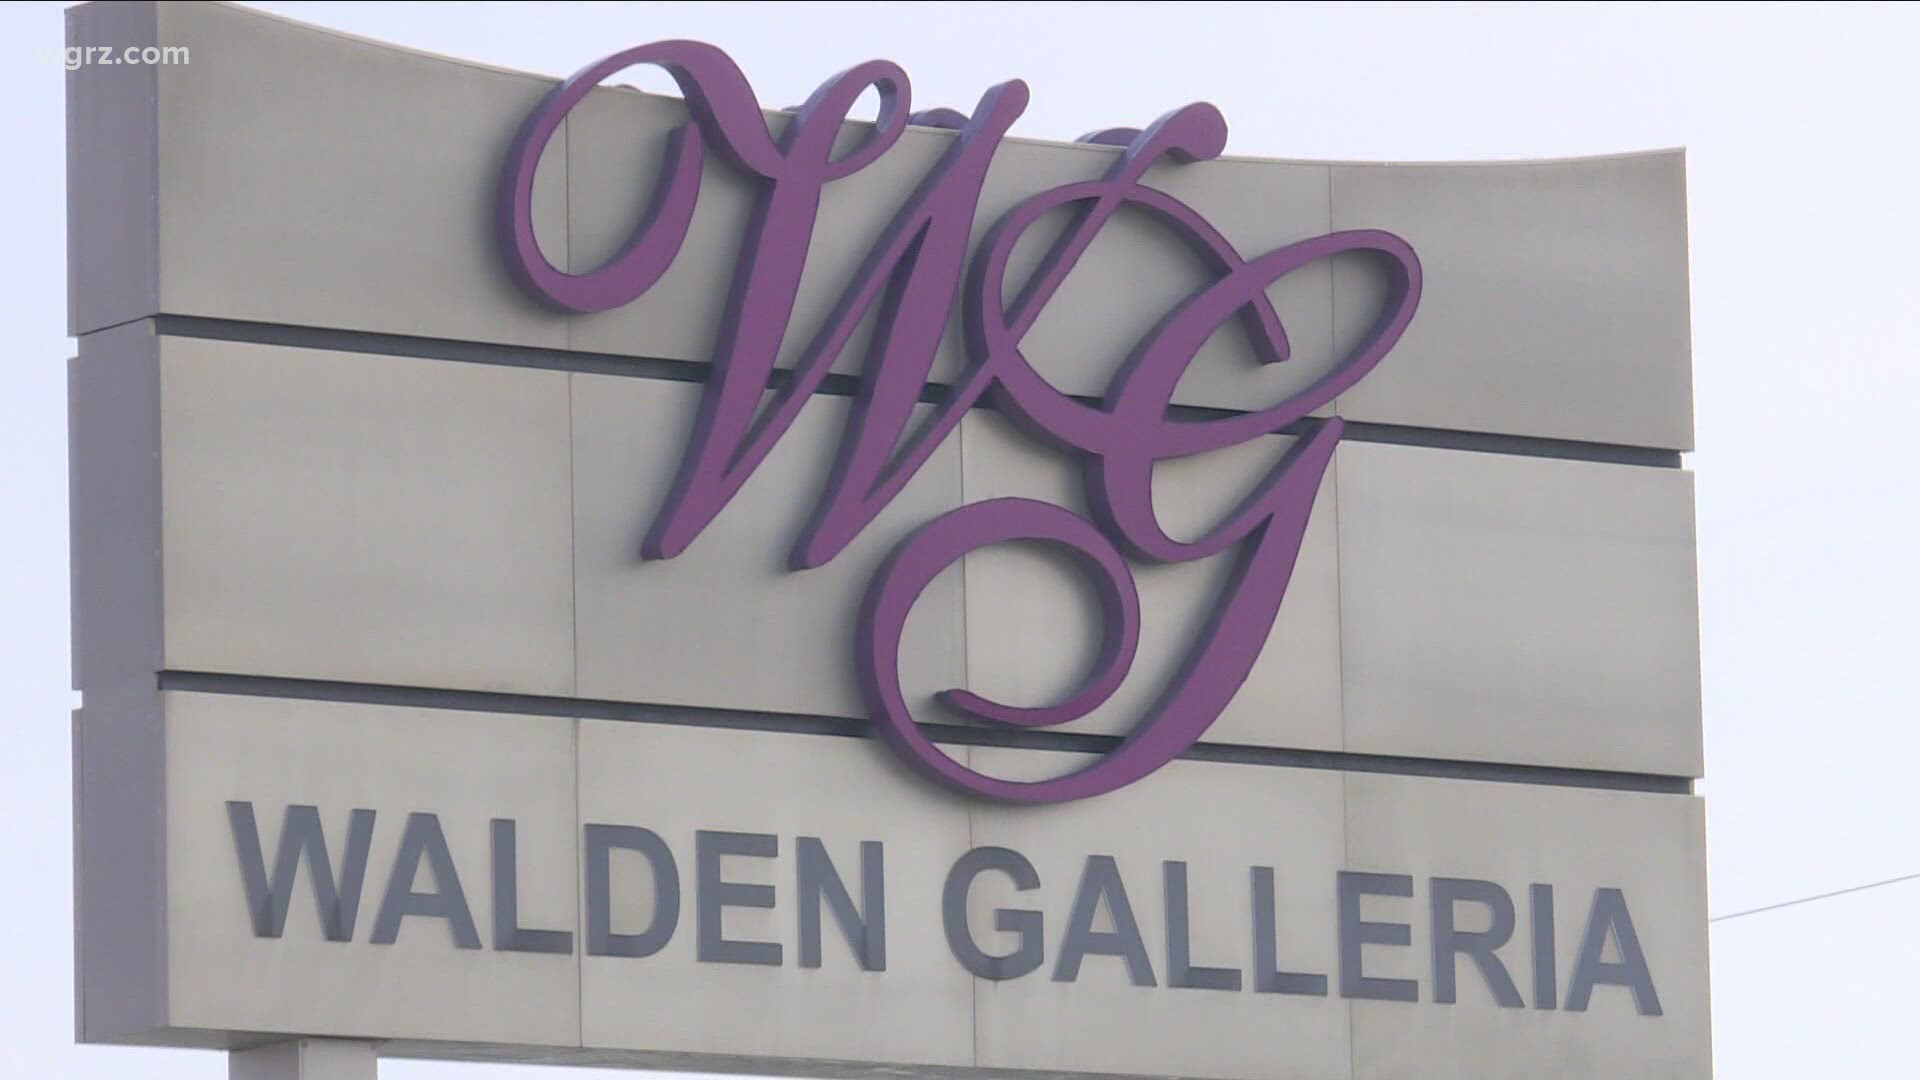 Walden Galleria Announce Outdoor Market